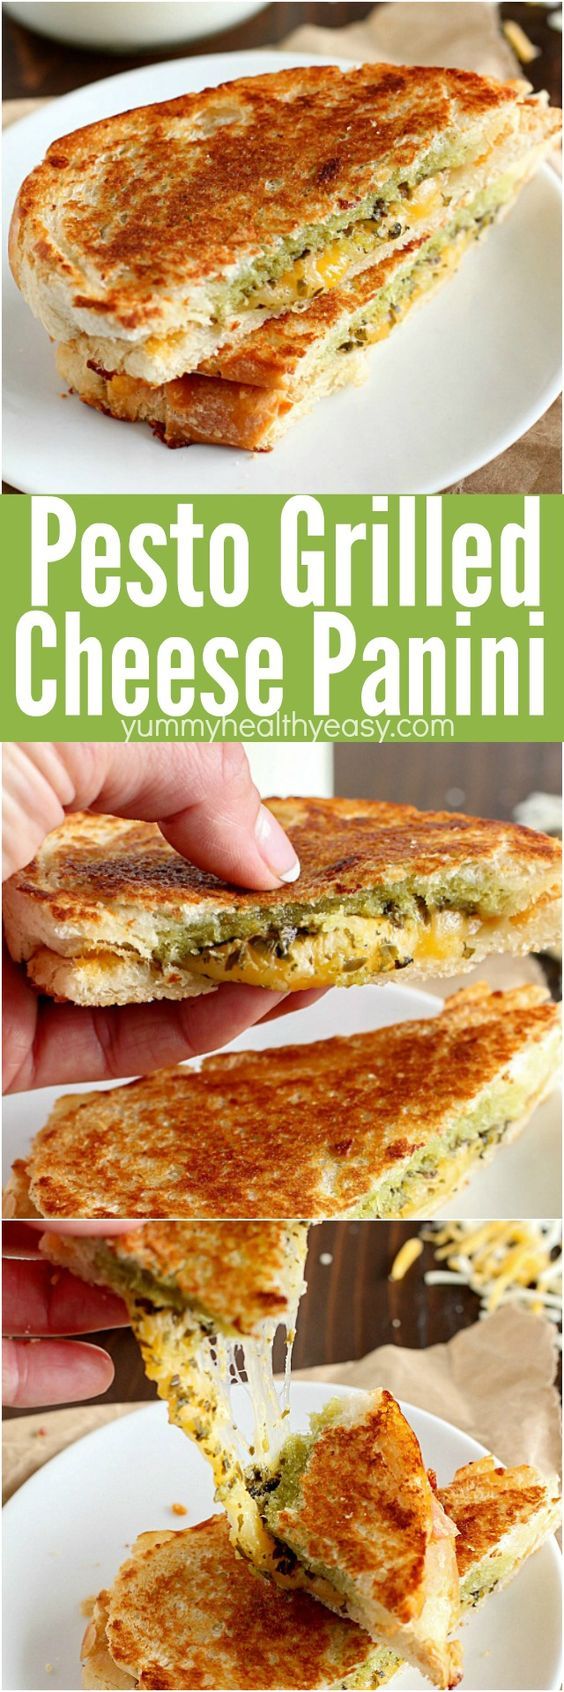 Pesto Grilled Cheese Panini